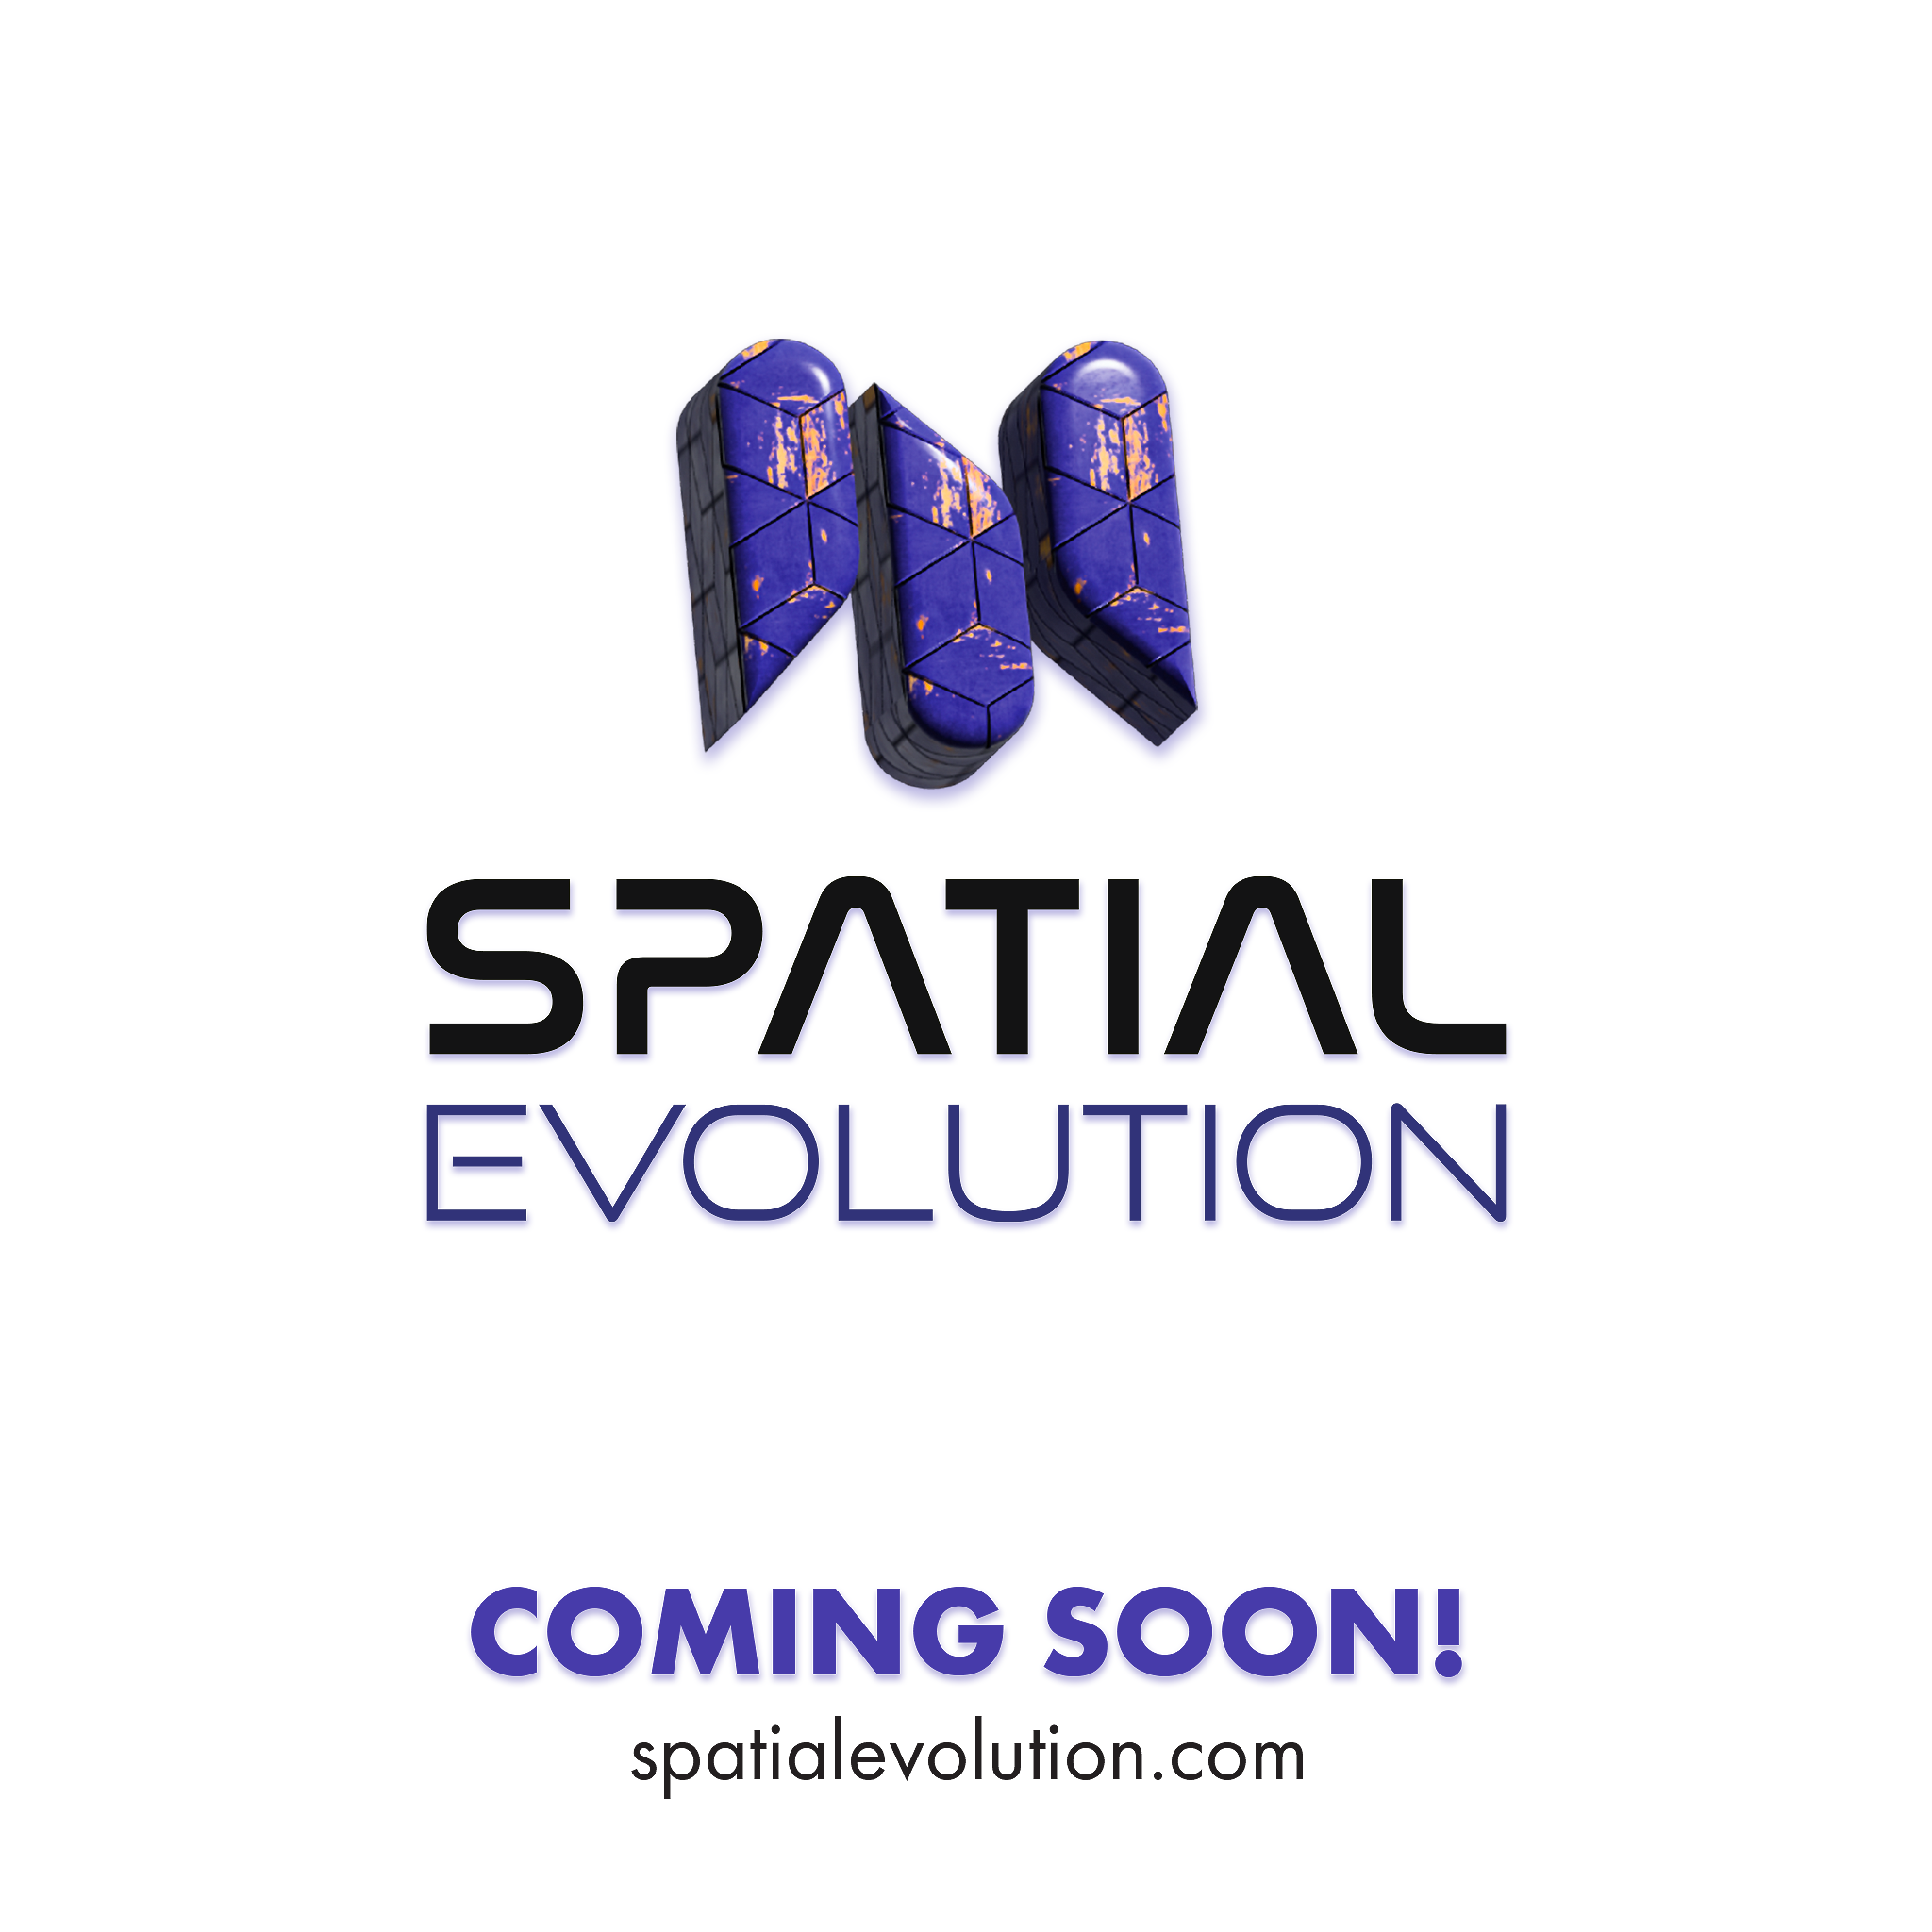 Spatial Evolution Website | Coming Soon!